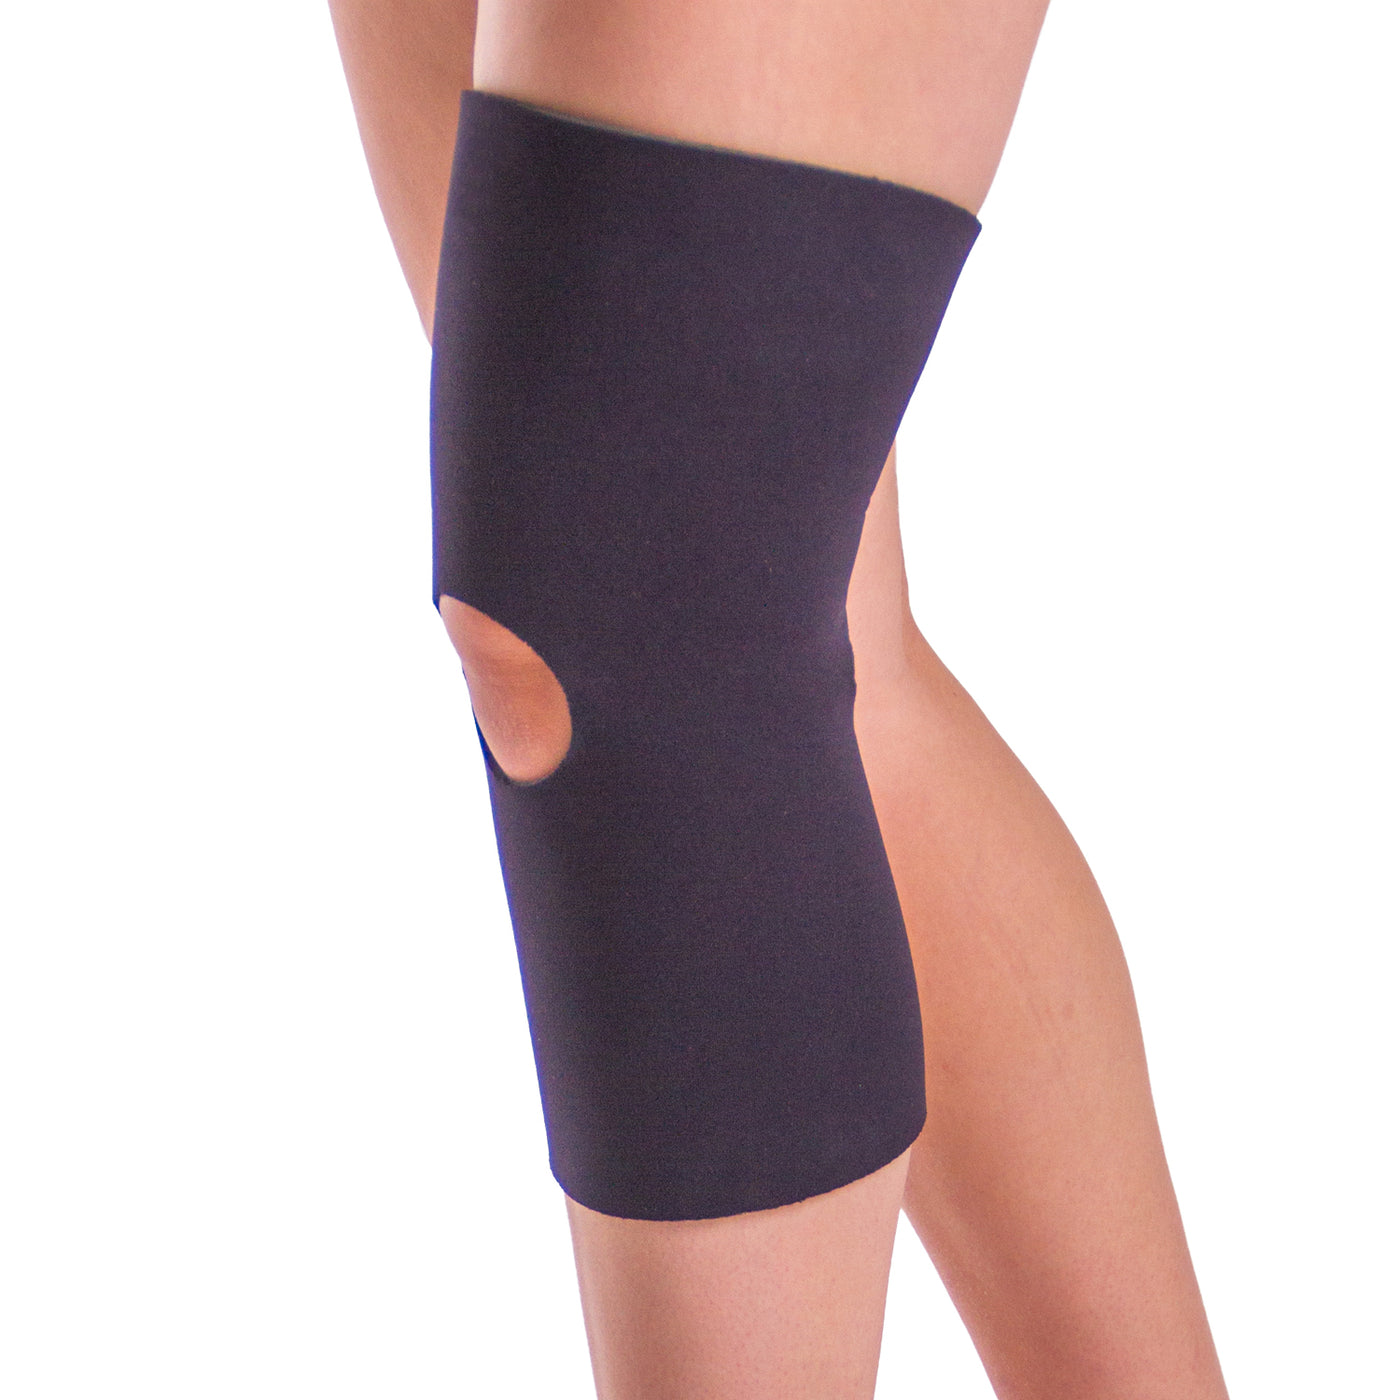 Neoprene open patella and open back athletic knee sleeve